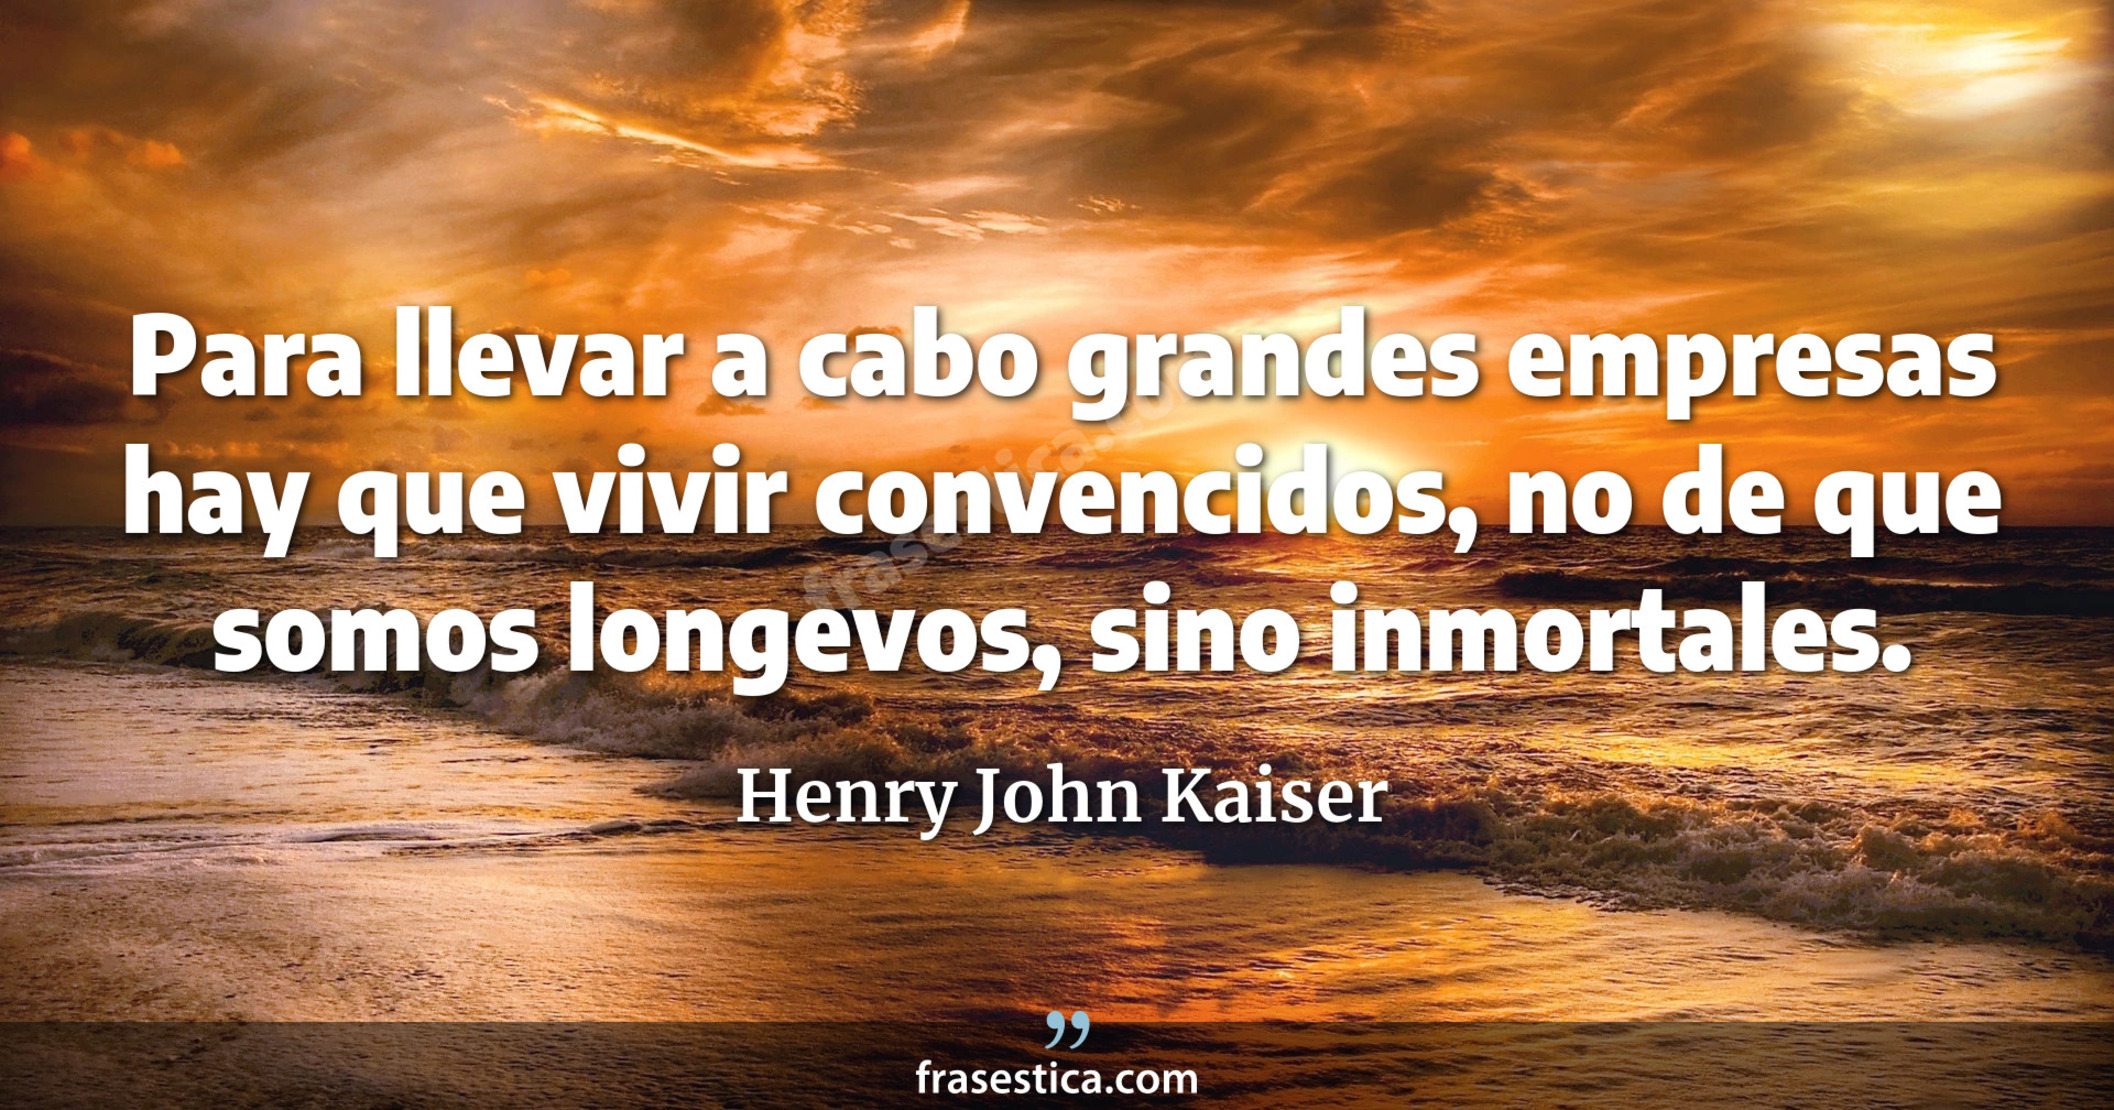 Para llevar a cabo grandes empresas hay que vivir convencidos, no de que somos longevos, sino inmortales. - Henry John Kaiser